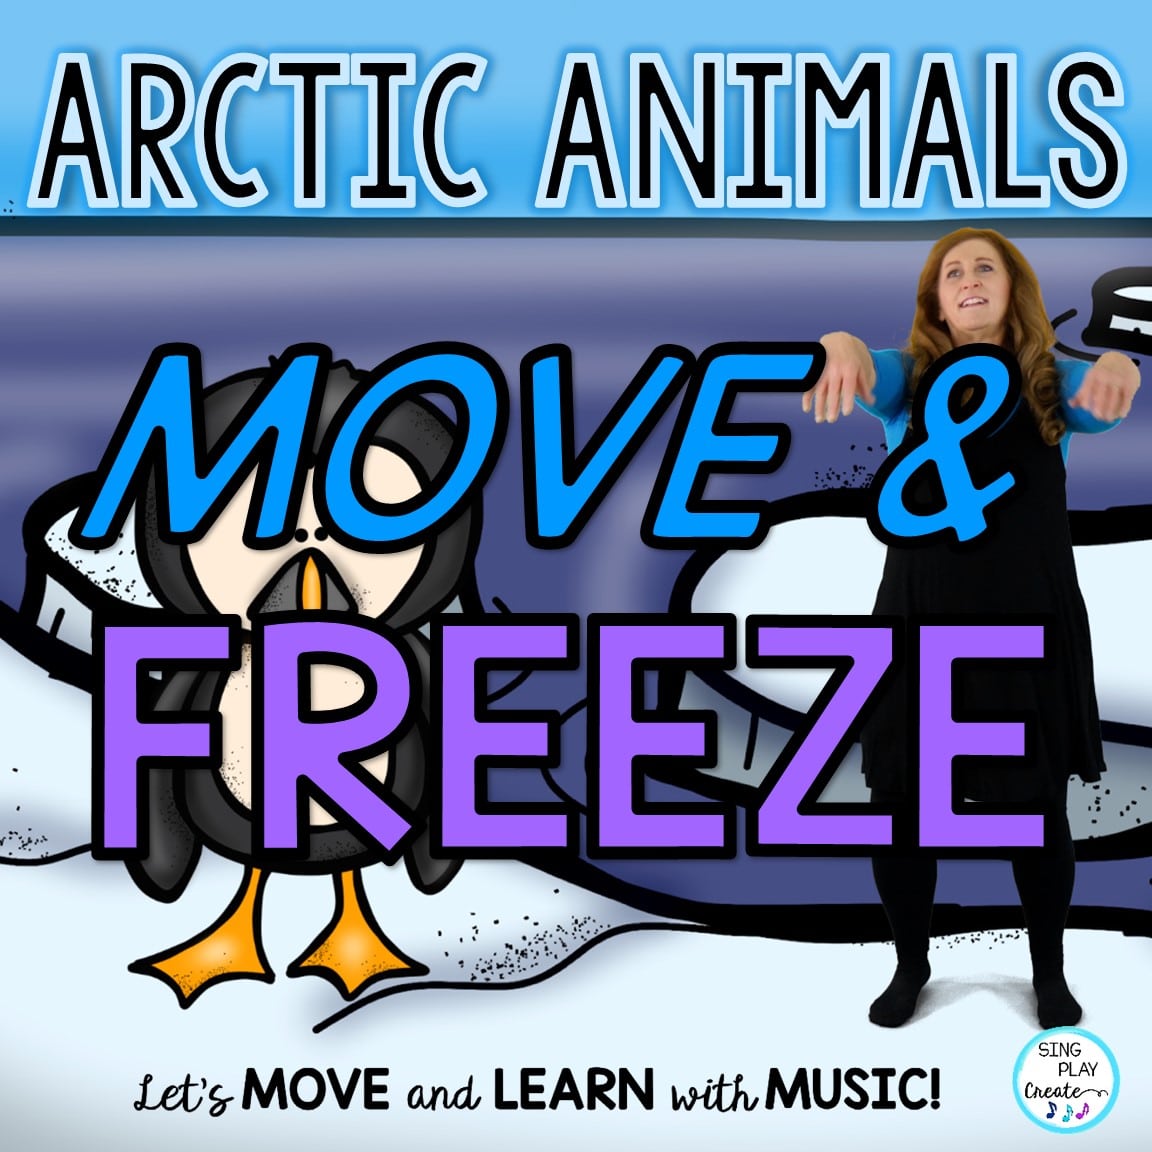 Arctic Animal Freeze Dance Brain Break P.E. (Download Now) 